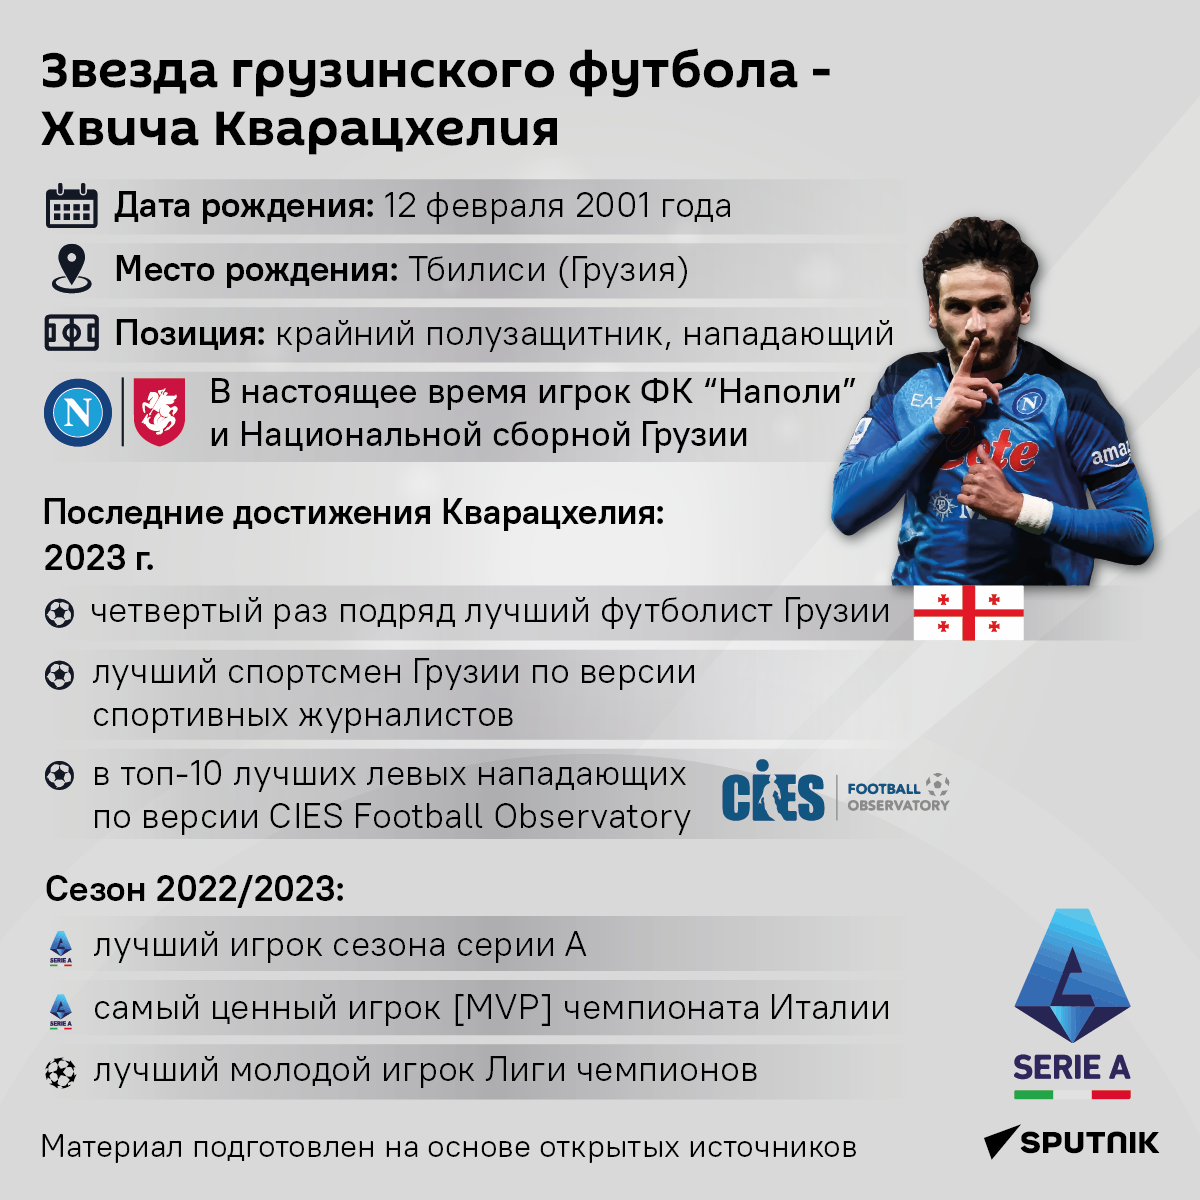 Хвича Кварацхелия - инфографика - Sputnik Грузия